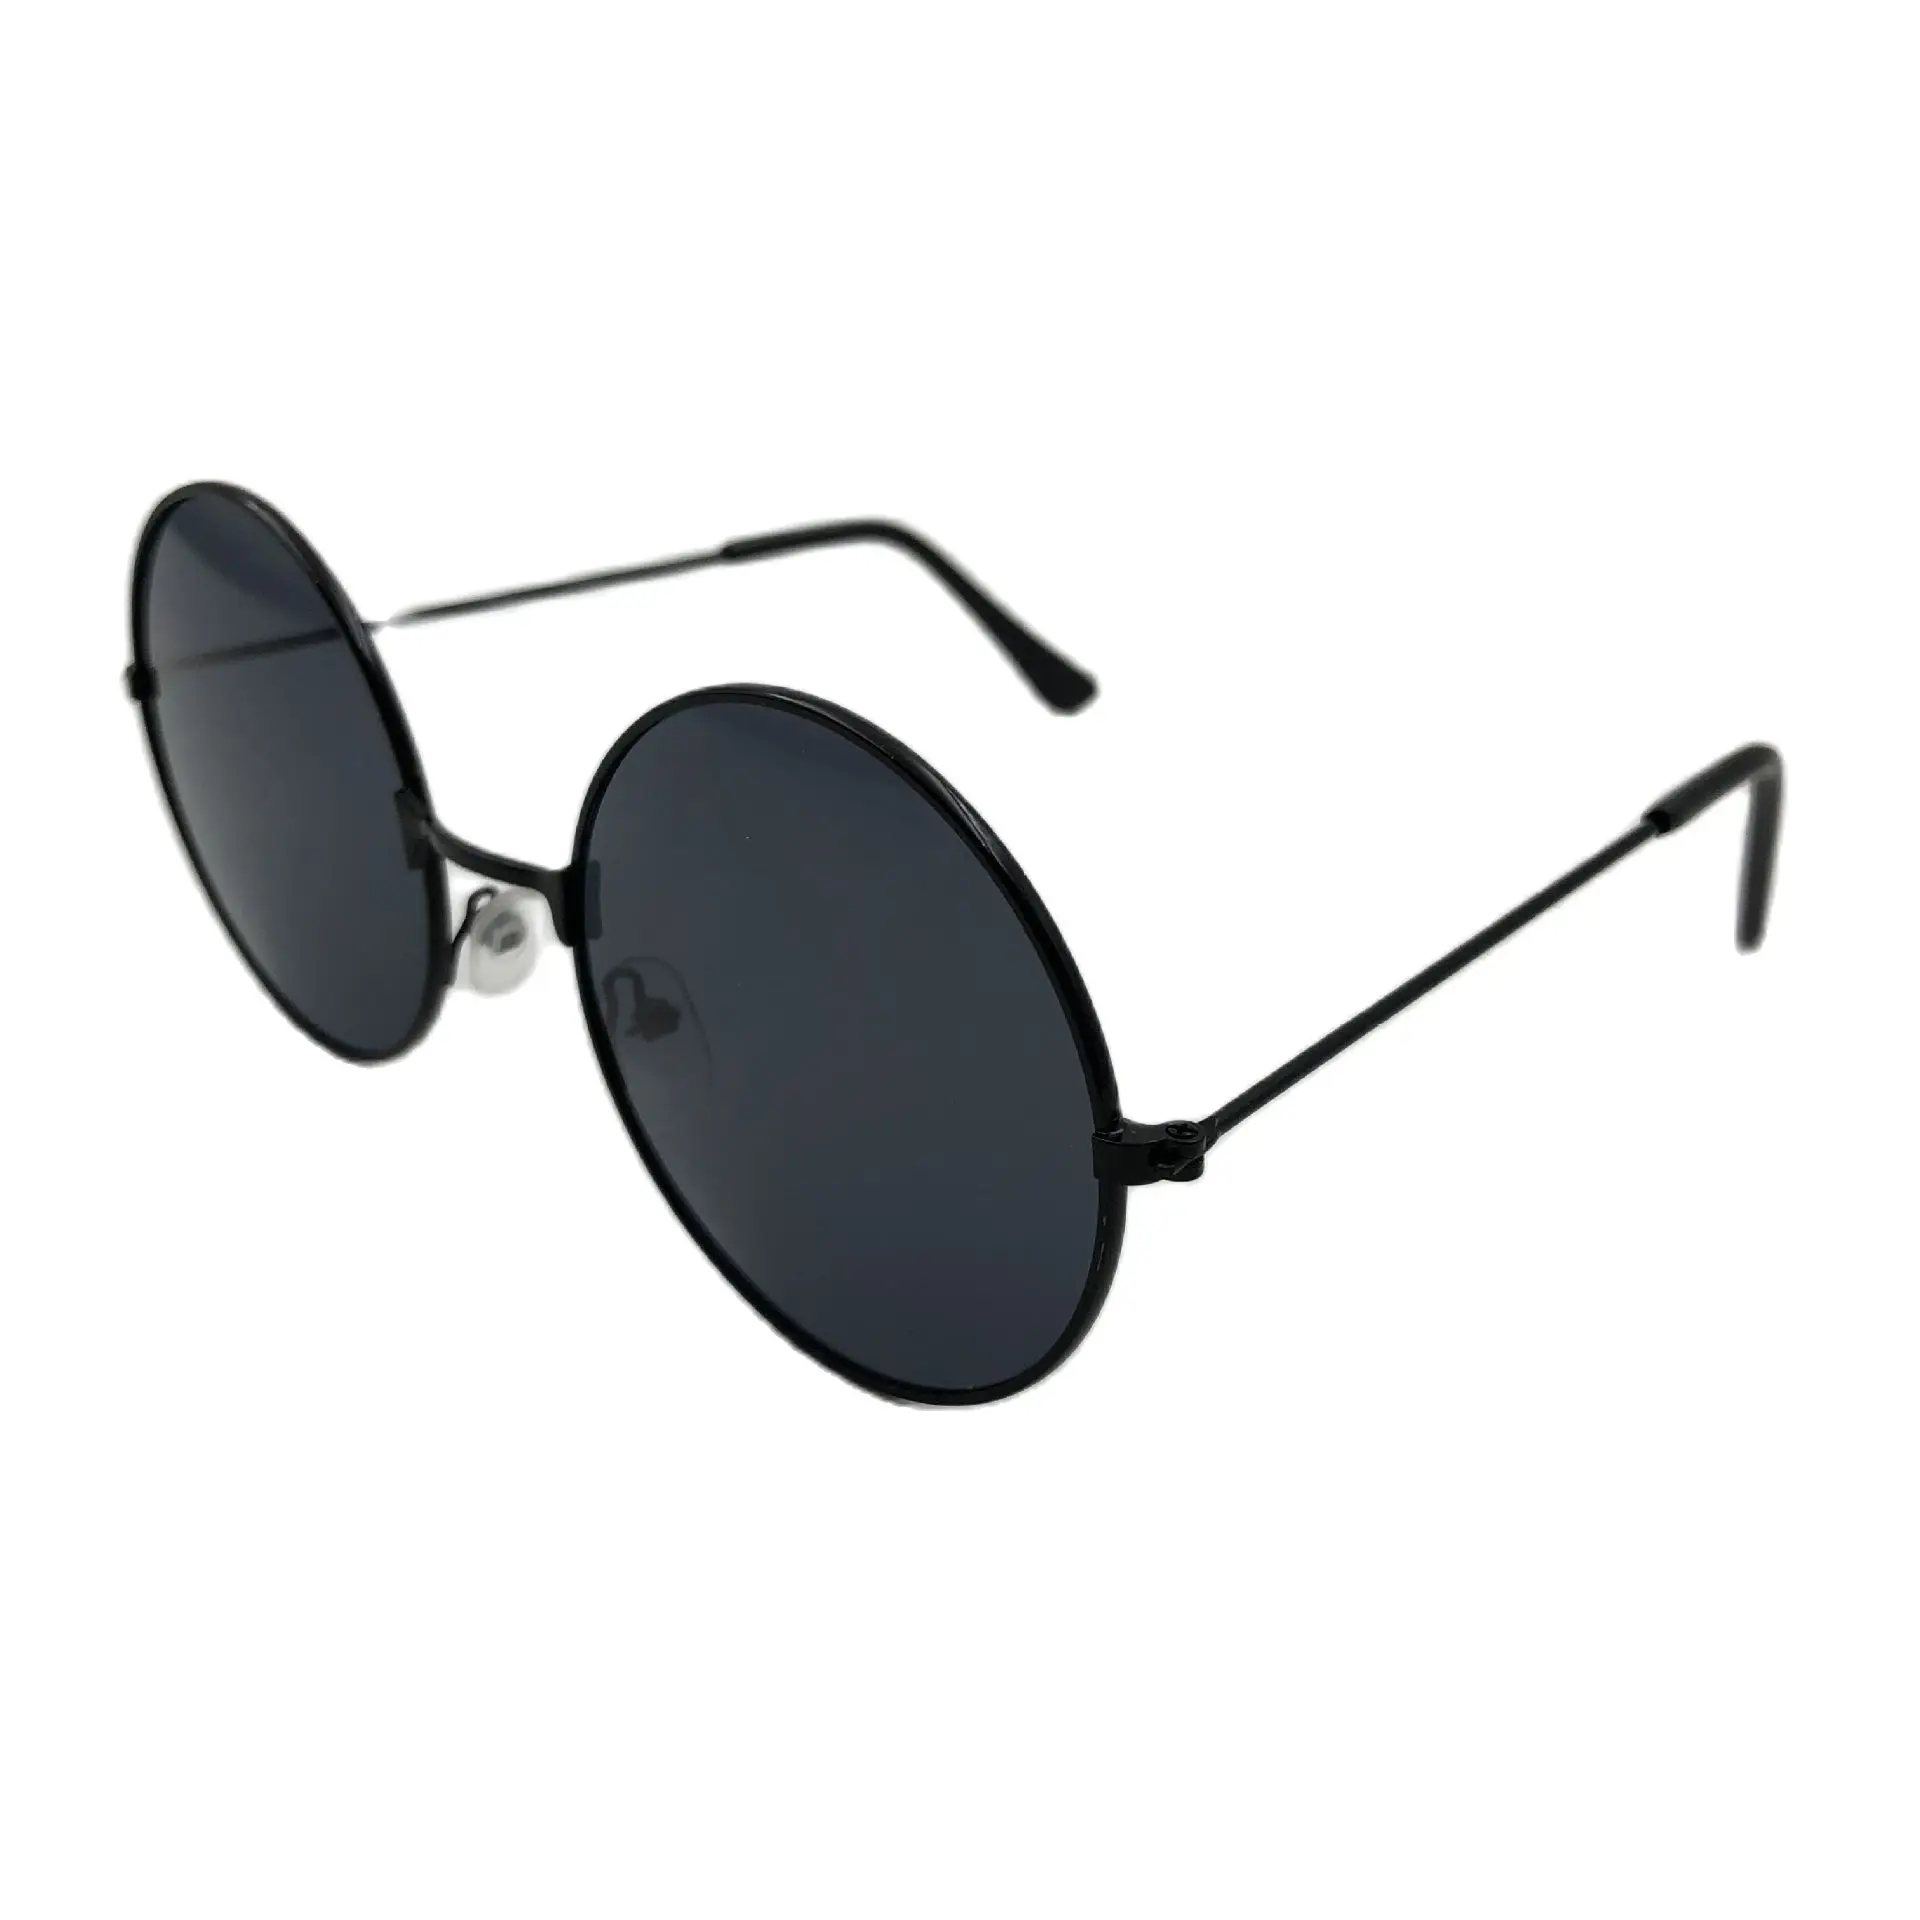 

Heiyuan New Prince Mirror Classic Round Sunglasses UV400 Transparent Progressive Ocean Piece Fashion Big Frame Glasses Report